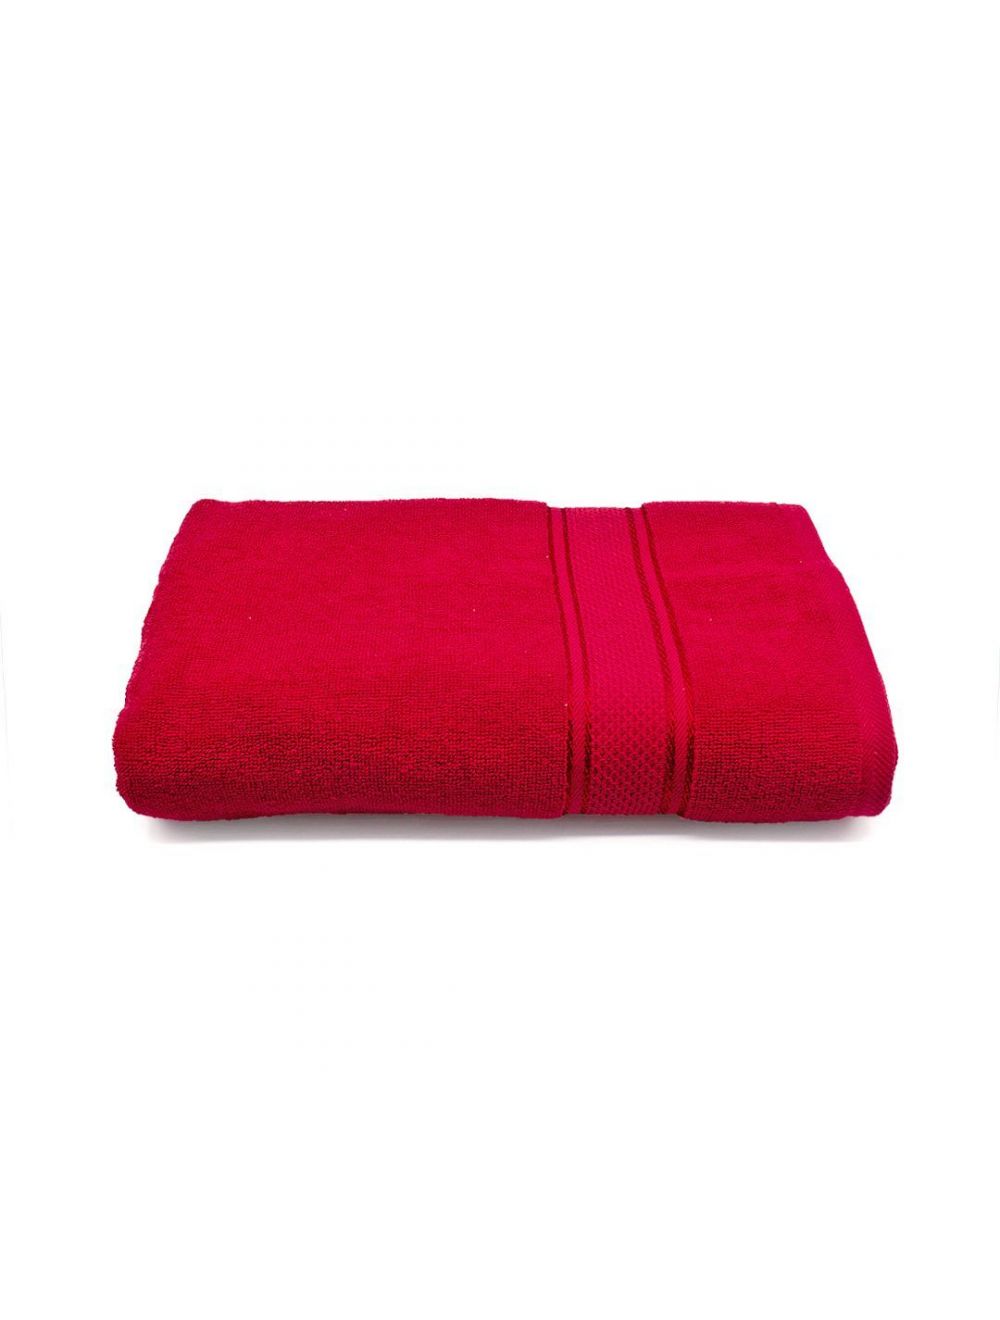 Rishahome 100% Cotton Bath Towel, Premium Collection, Red  -14RHFT053